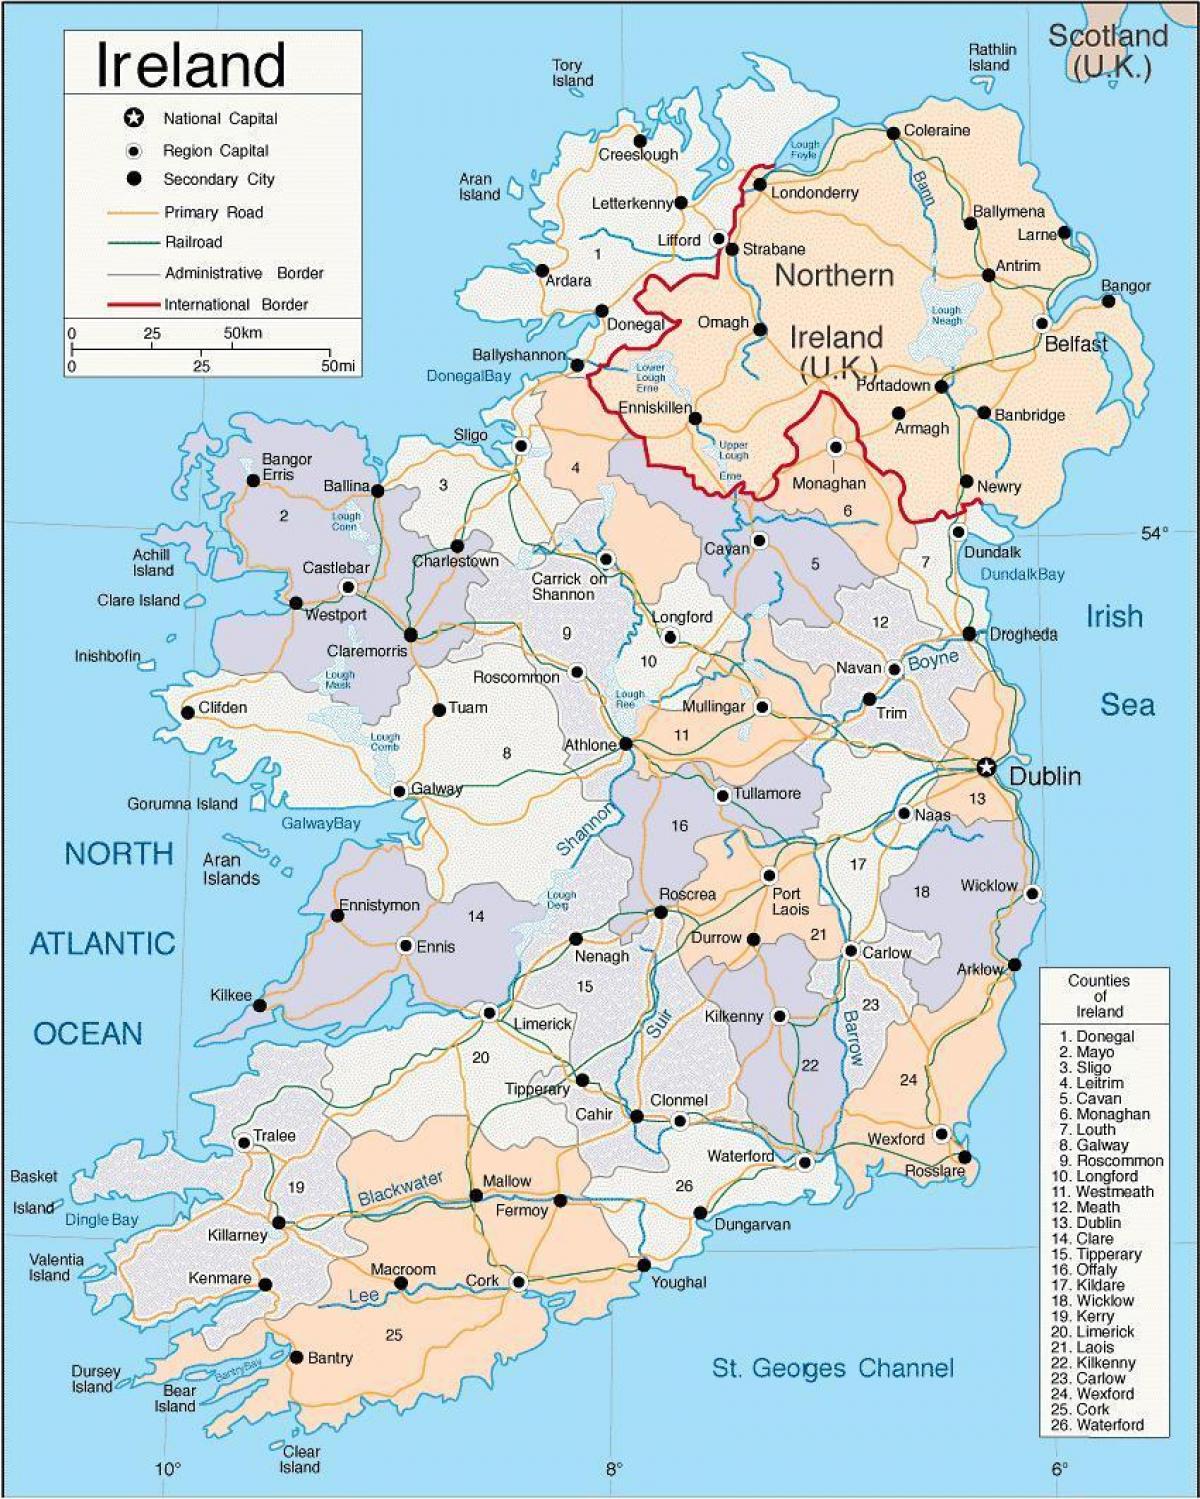 kort over irland, herunder amter